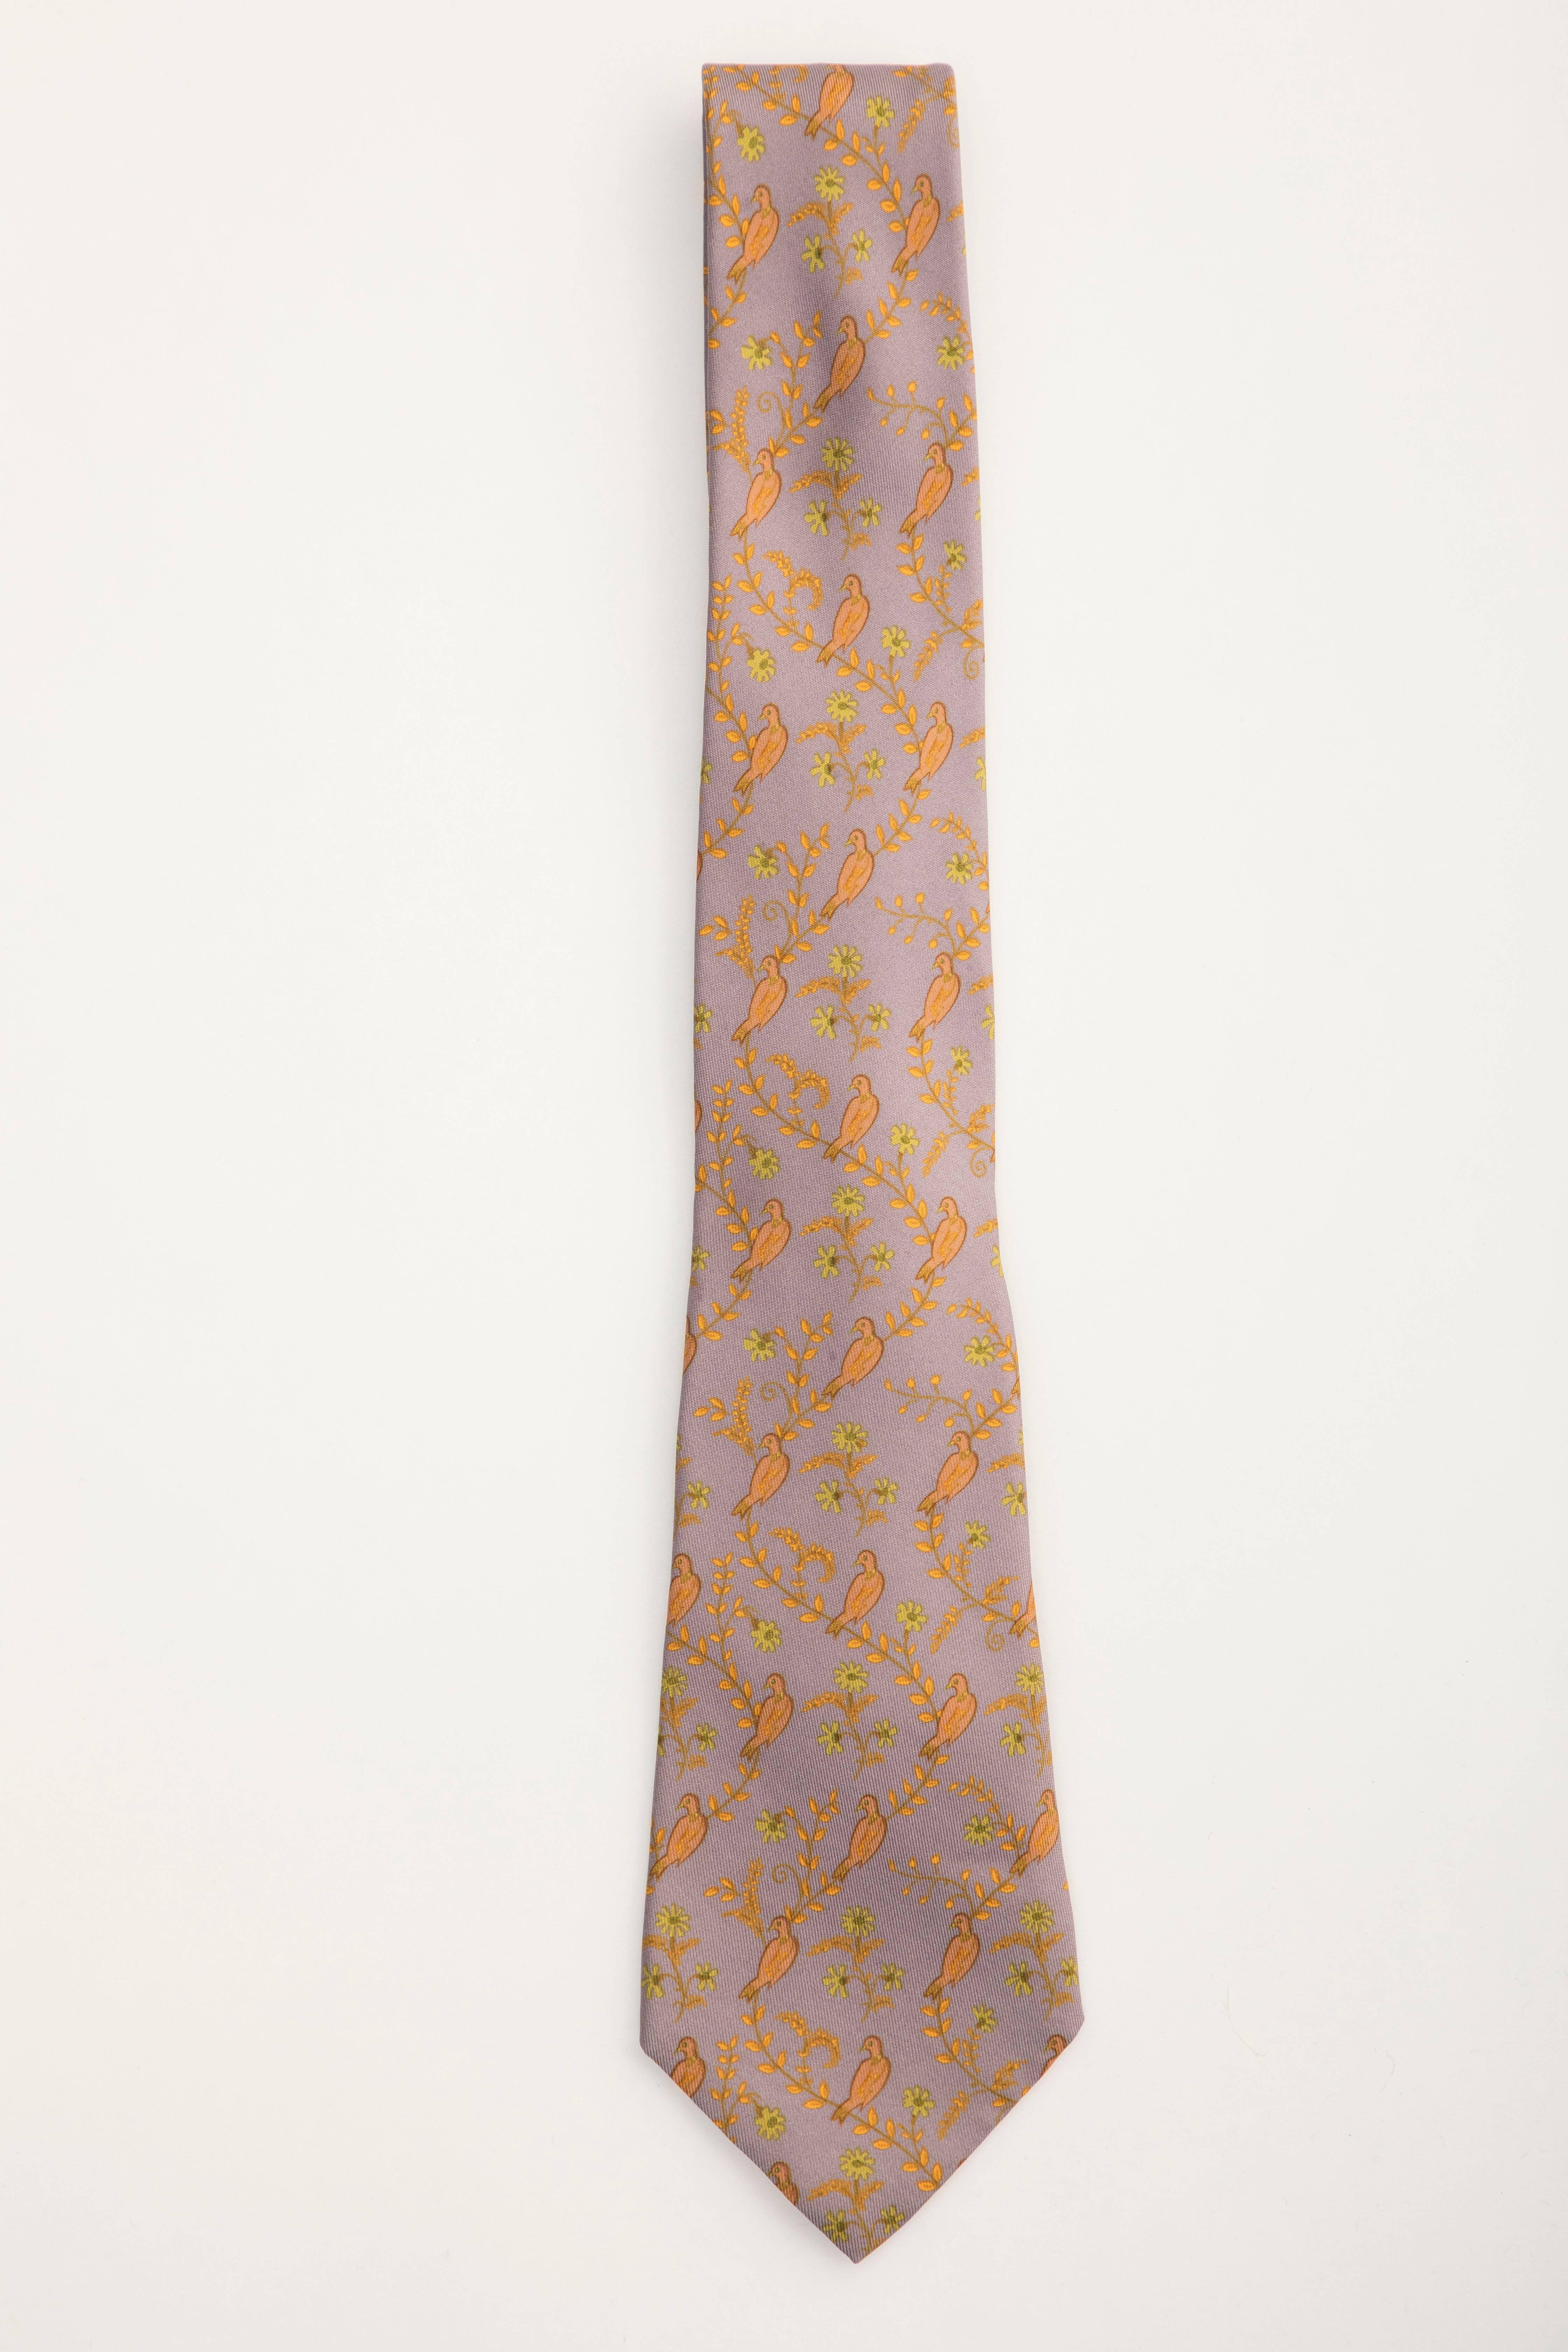  Hermès lavender, gold, green silk tie with bird motif throughout.


Length: 56, Width: 3.25
